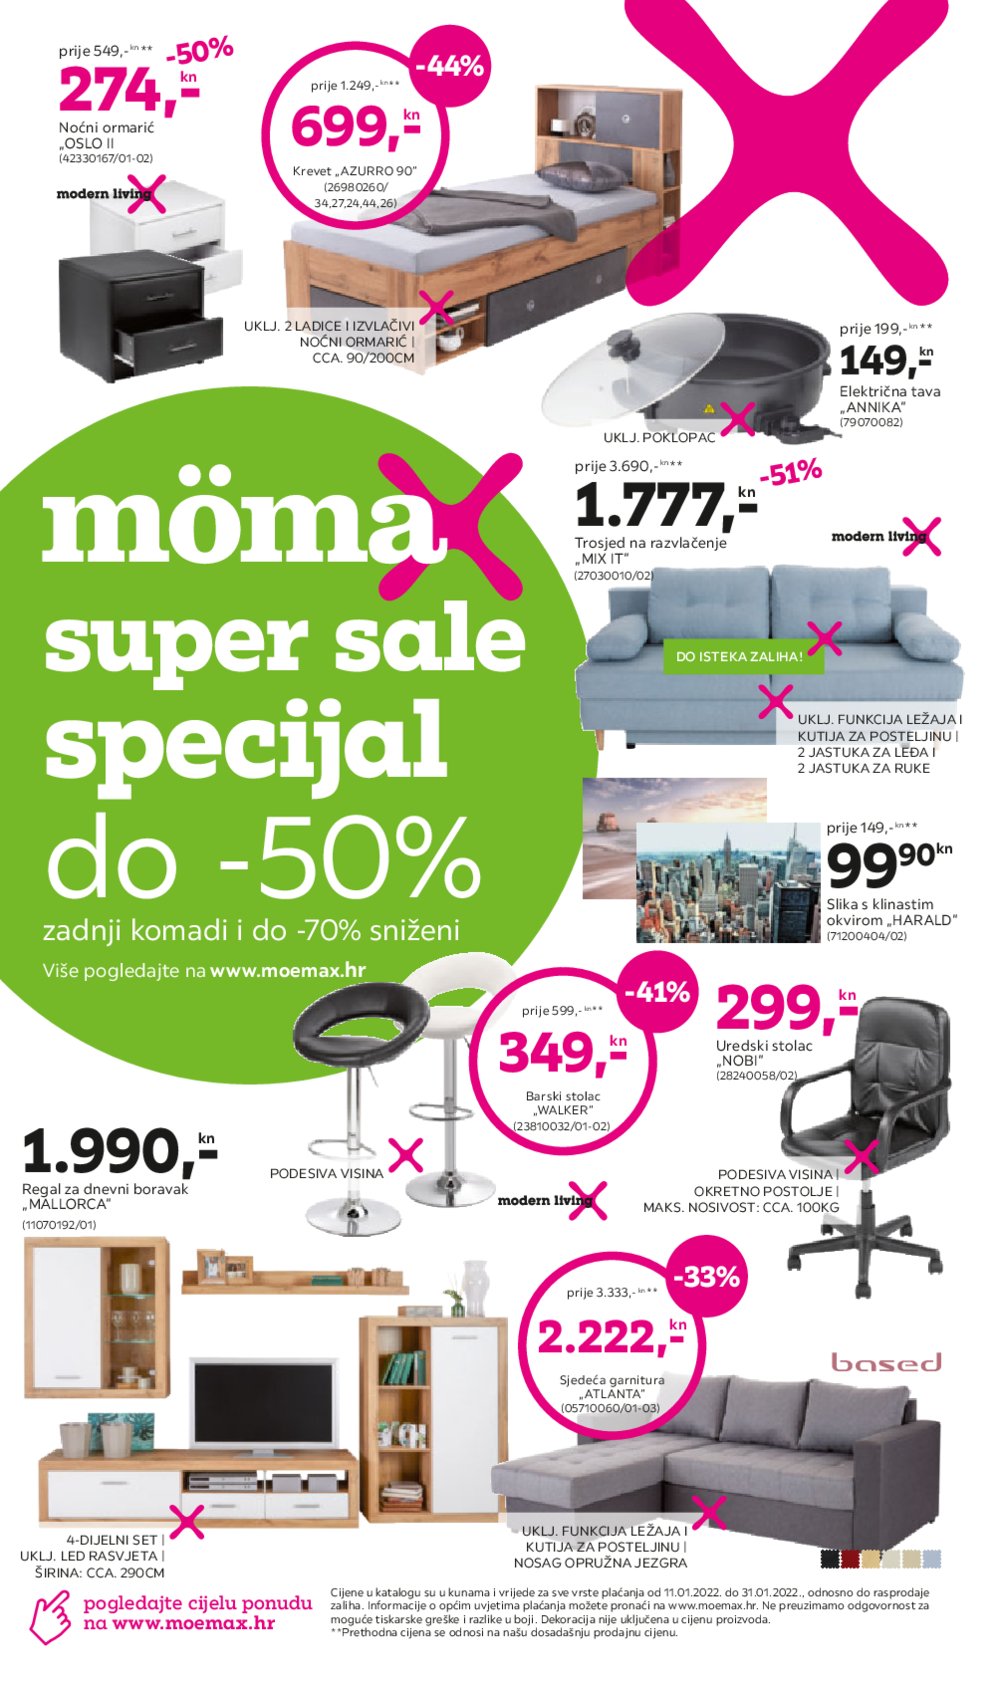 Momax katalog Akcija super sale specijal 11.01.-31.01.2022.